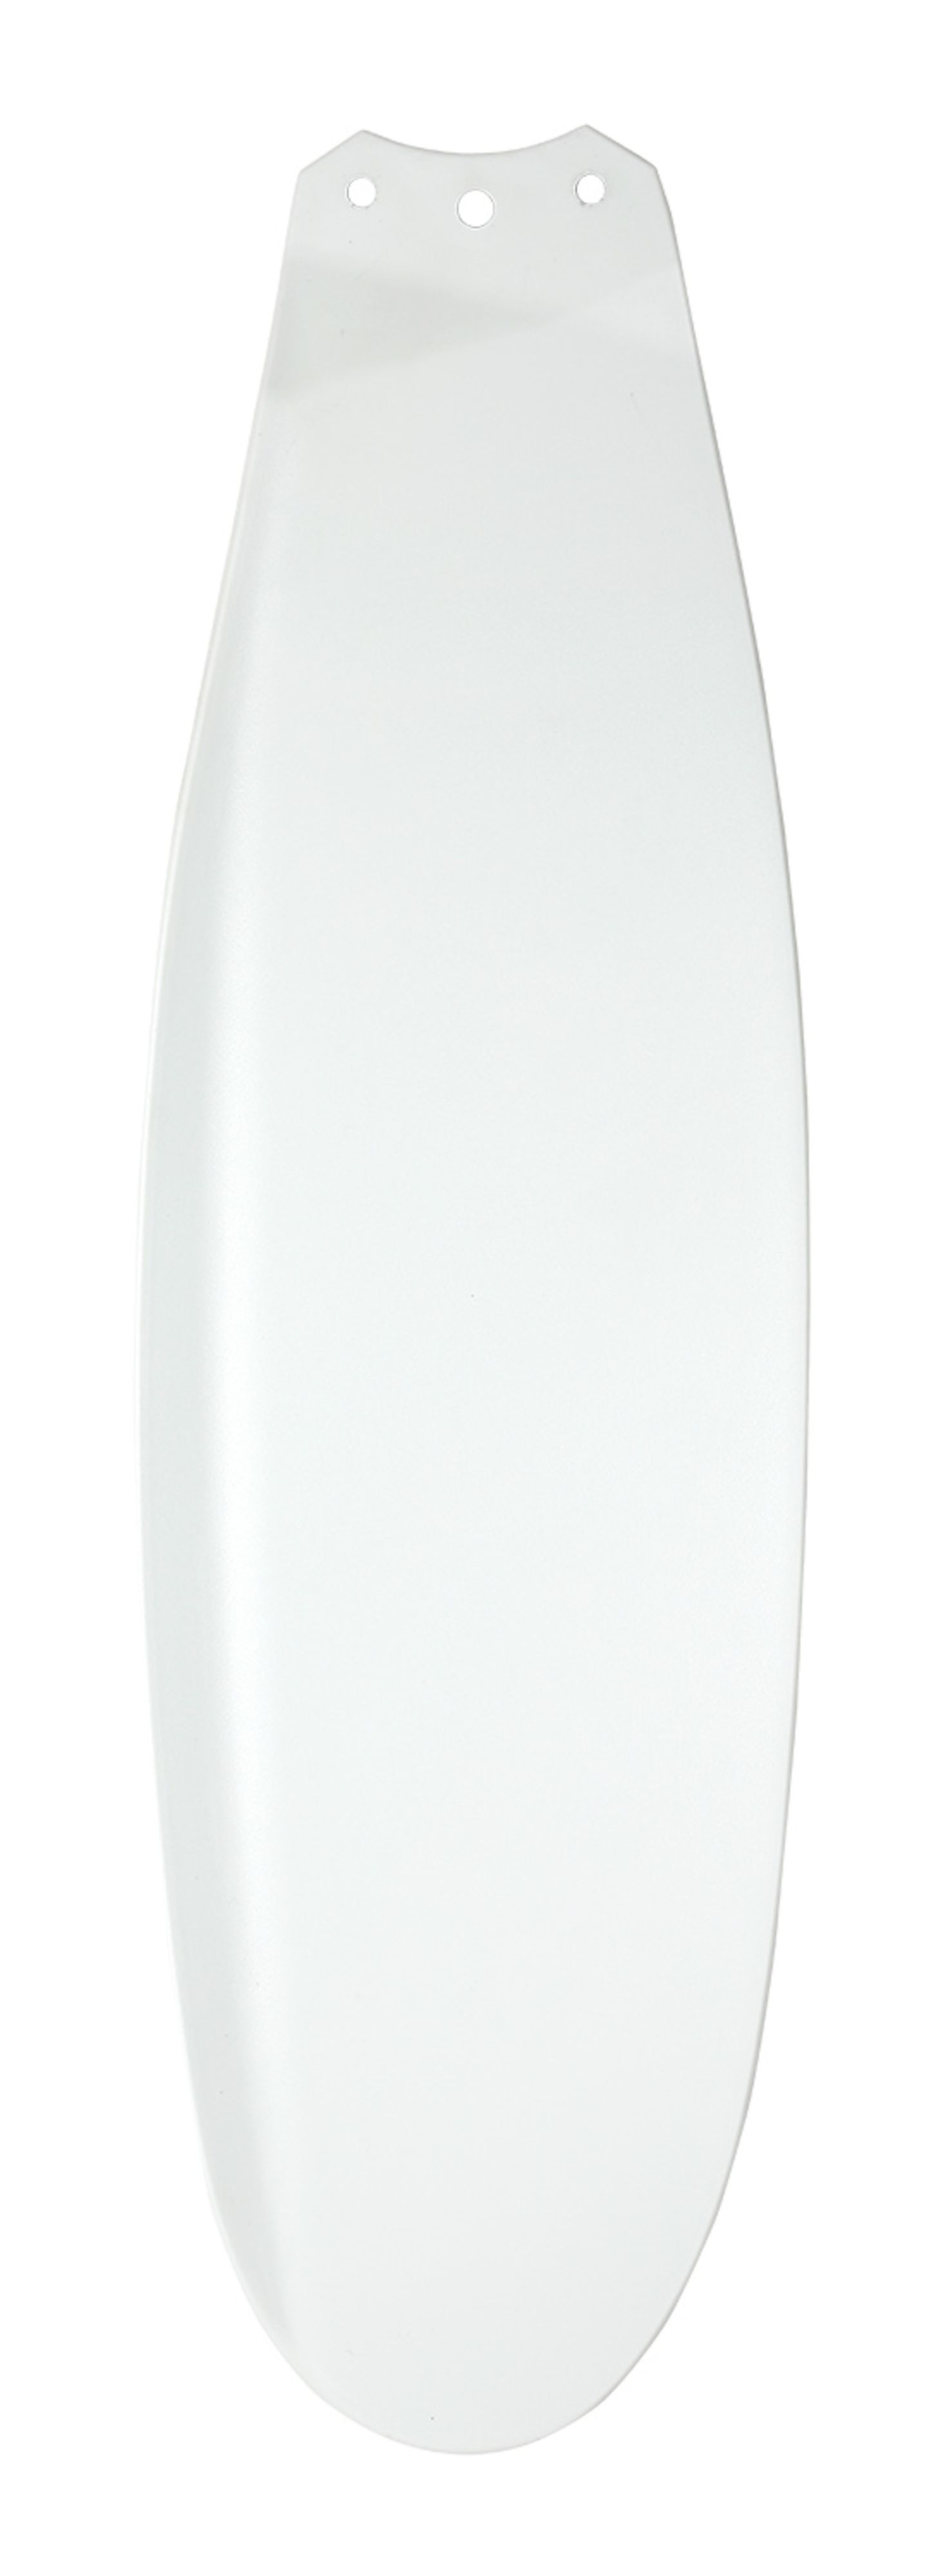 Weiß Plano II Eco CASAFAN Deckenventilator LED (13 Watt)